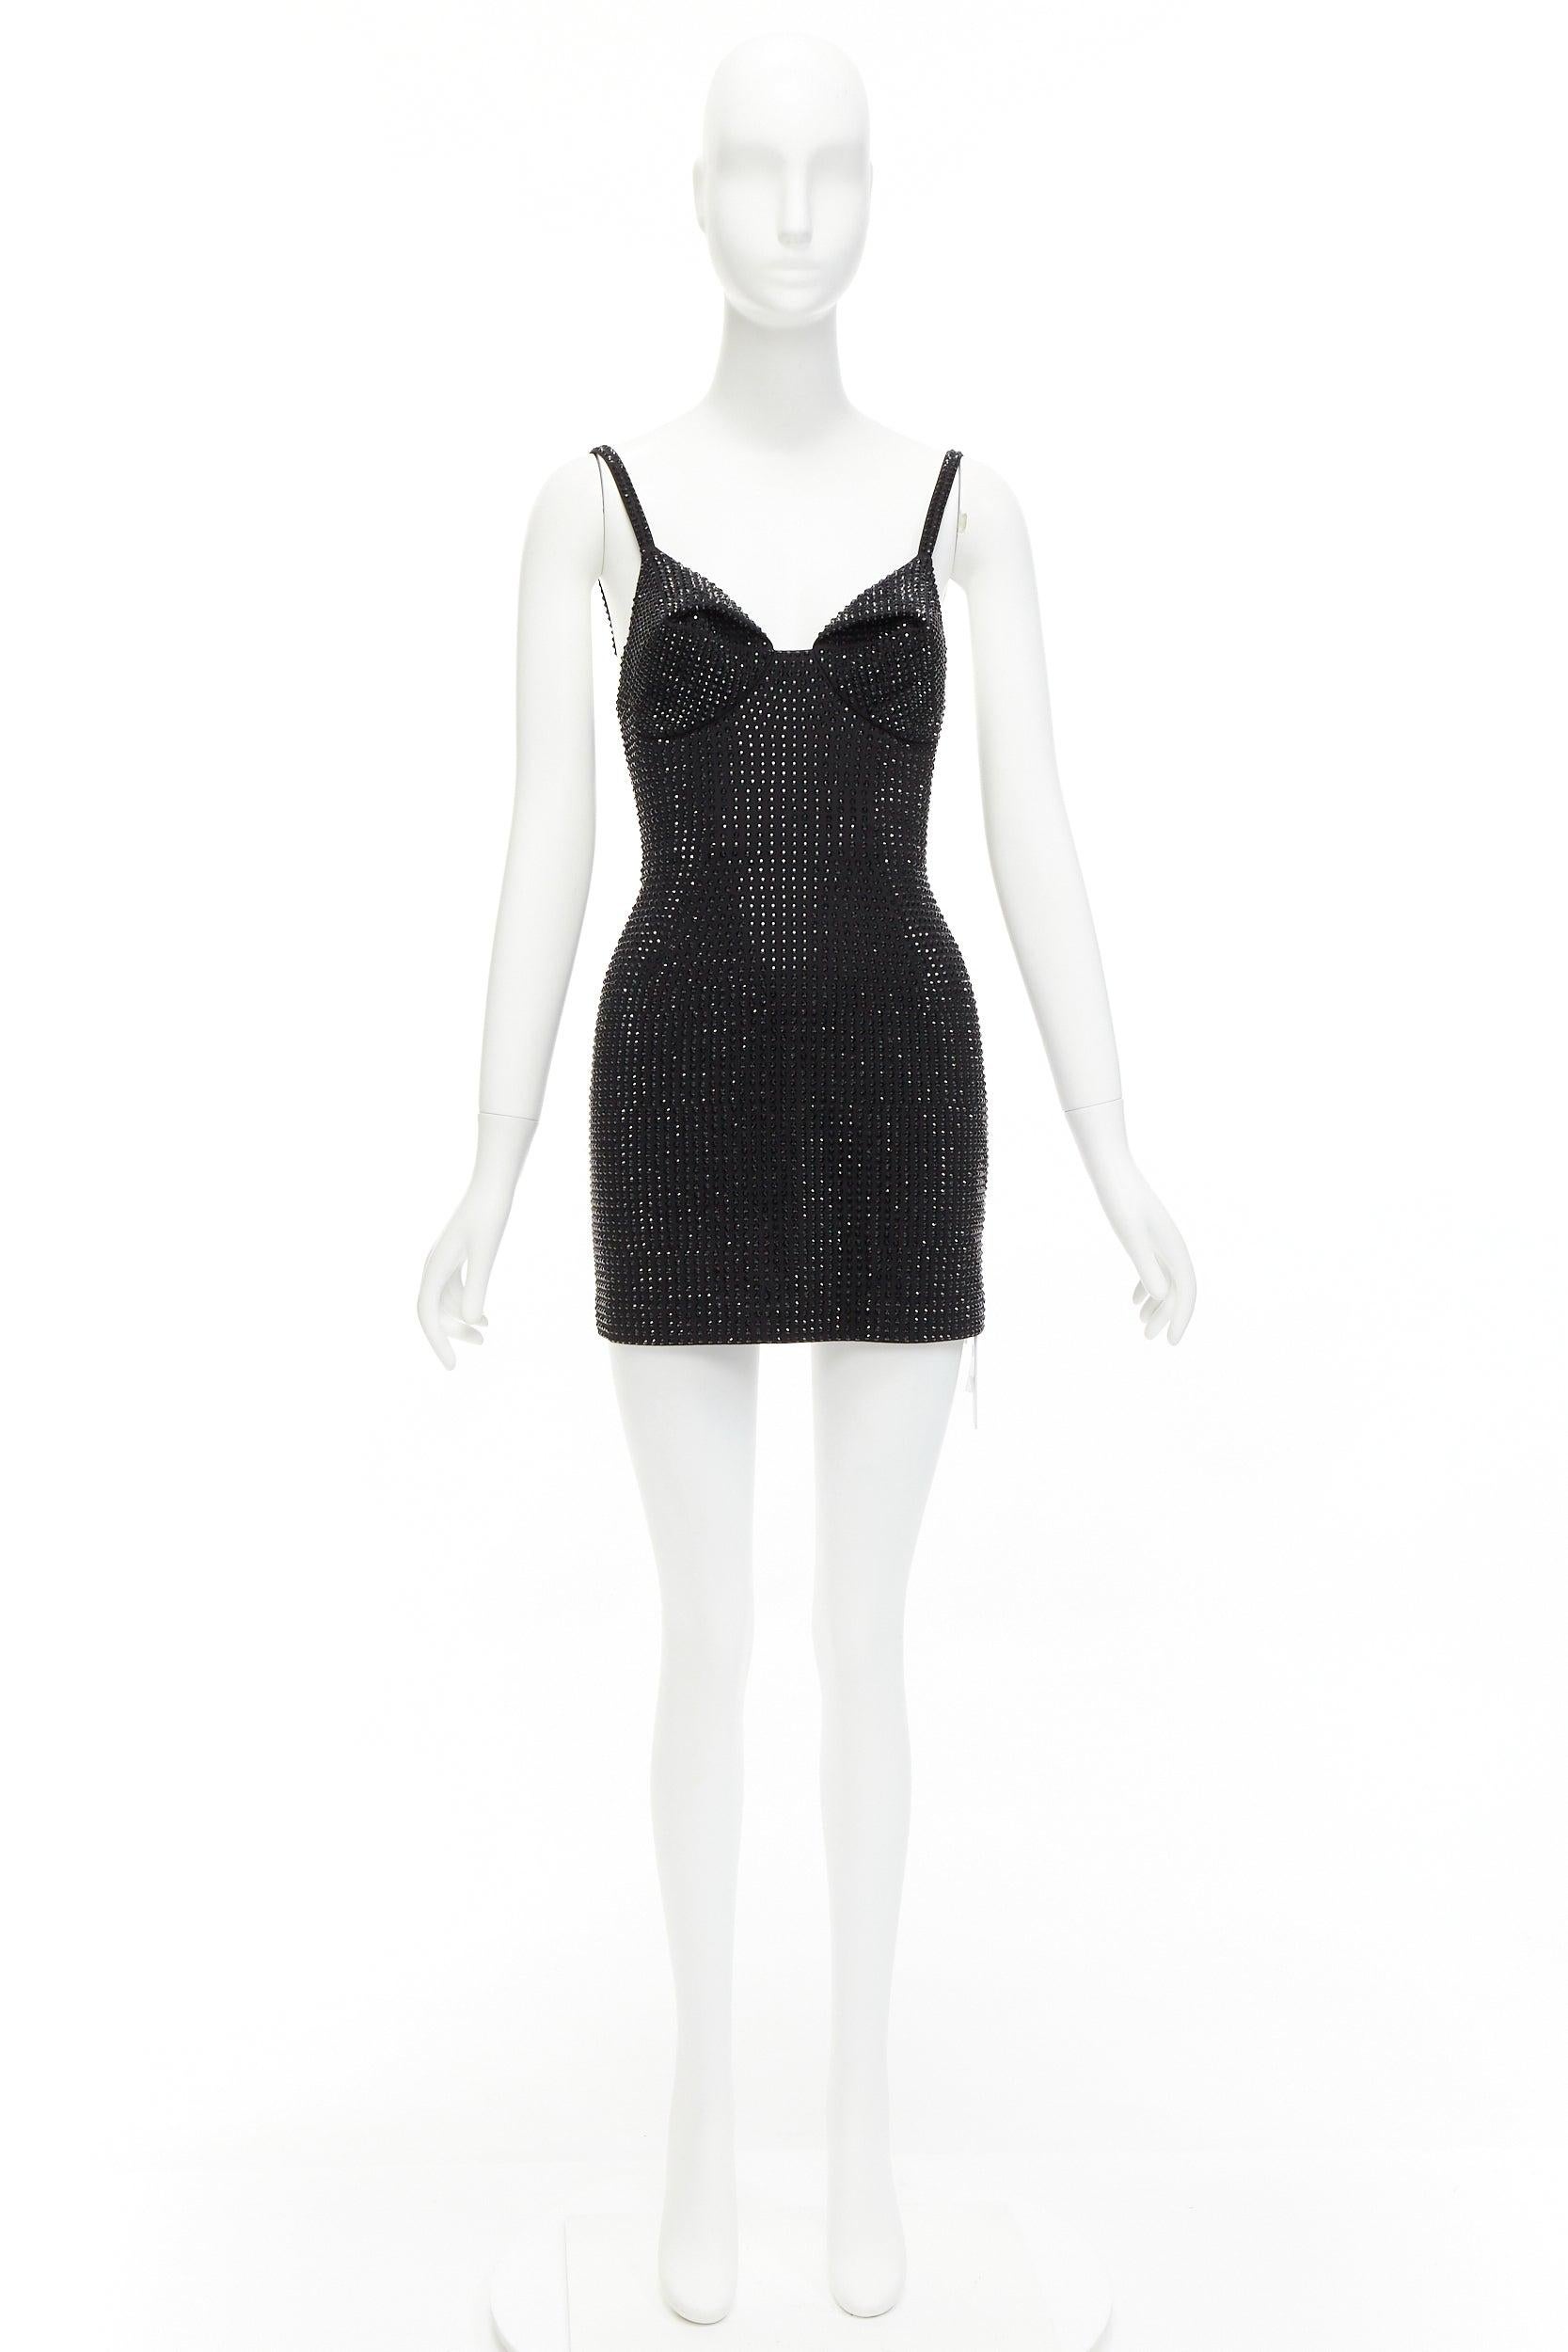 AREA black crystal embellished conical bra spaghetti bodycon mini dress US2 S 5